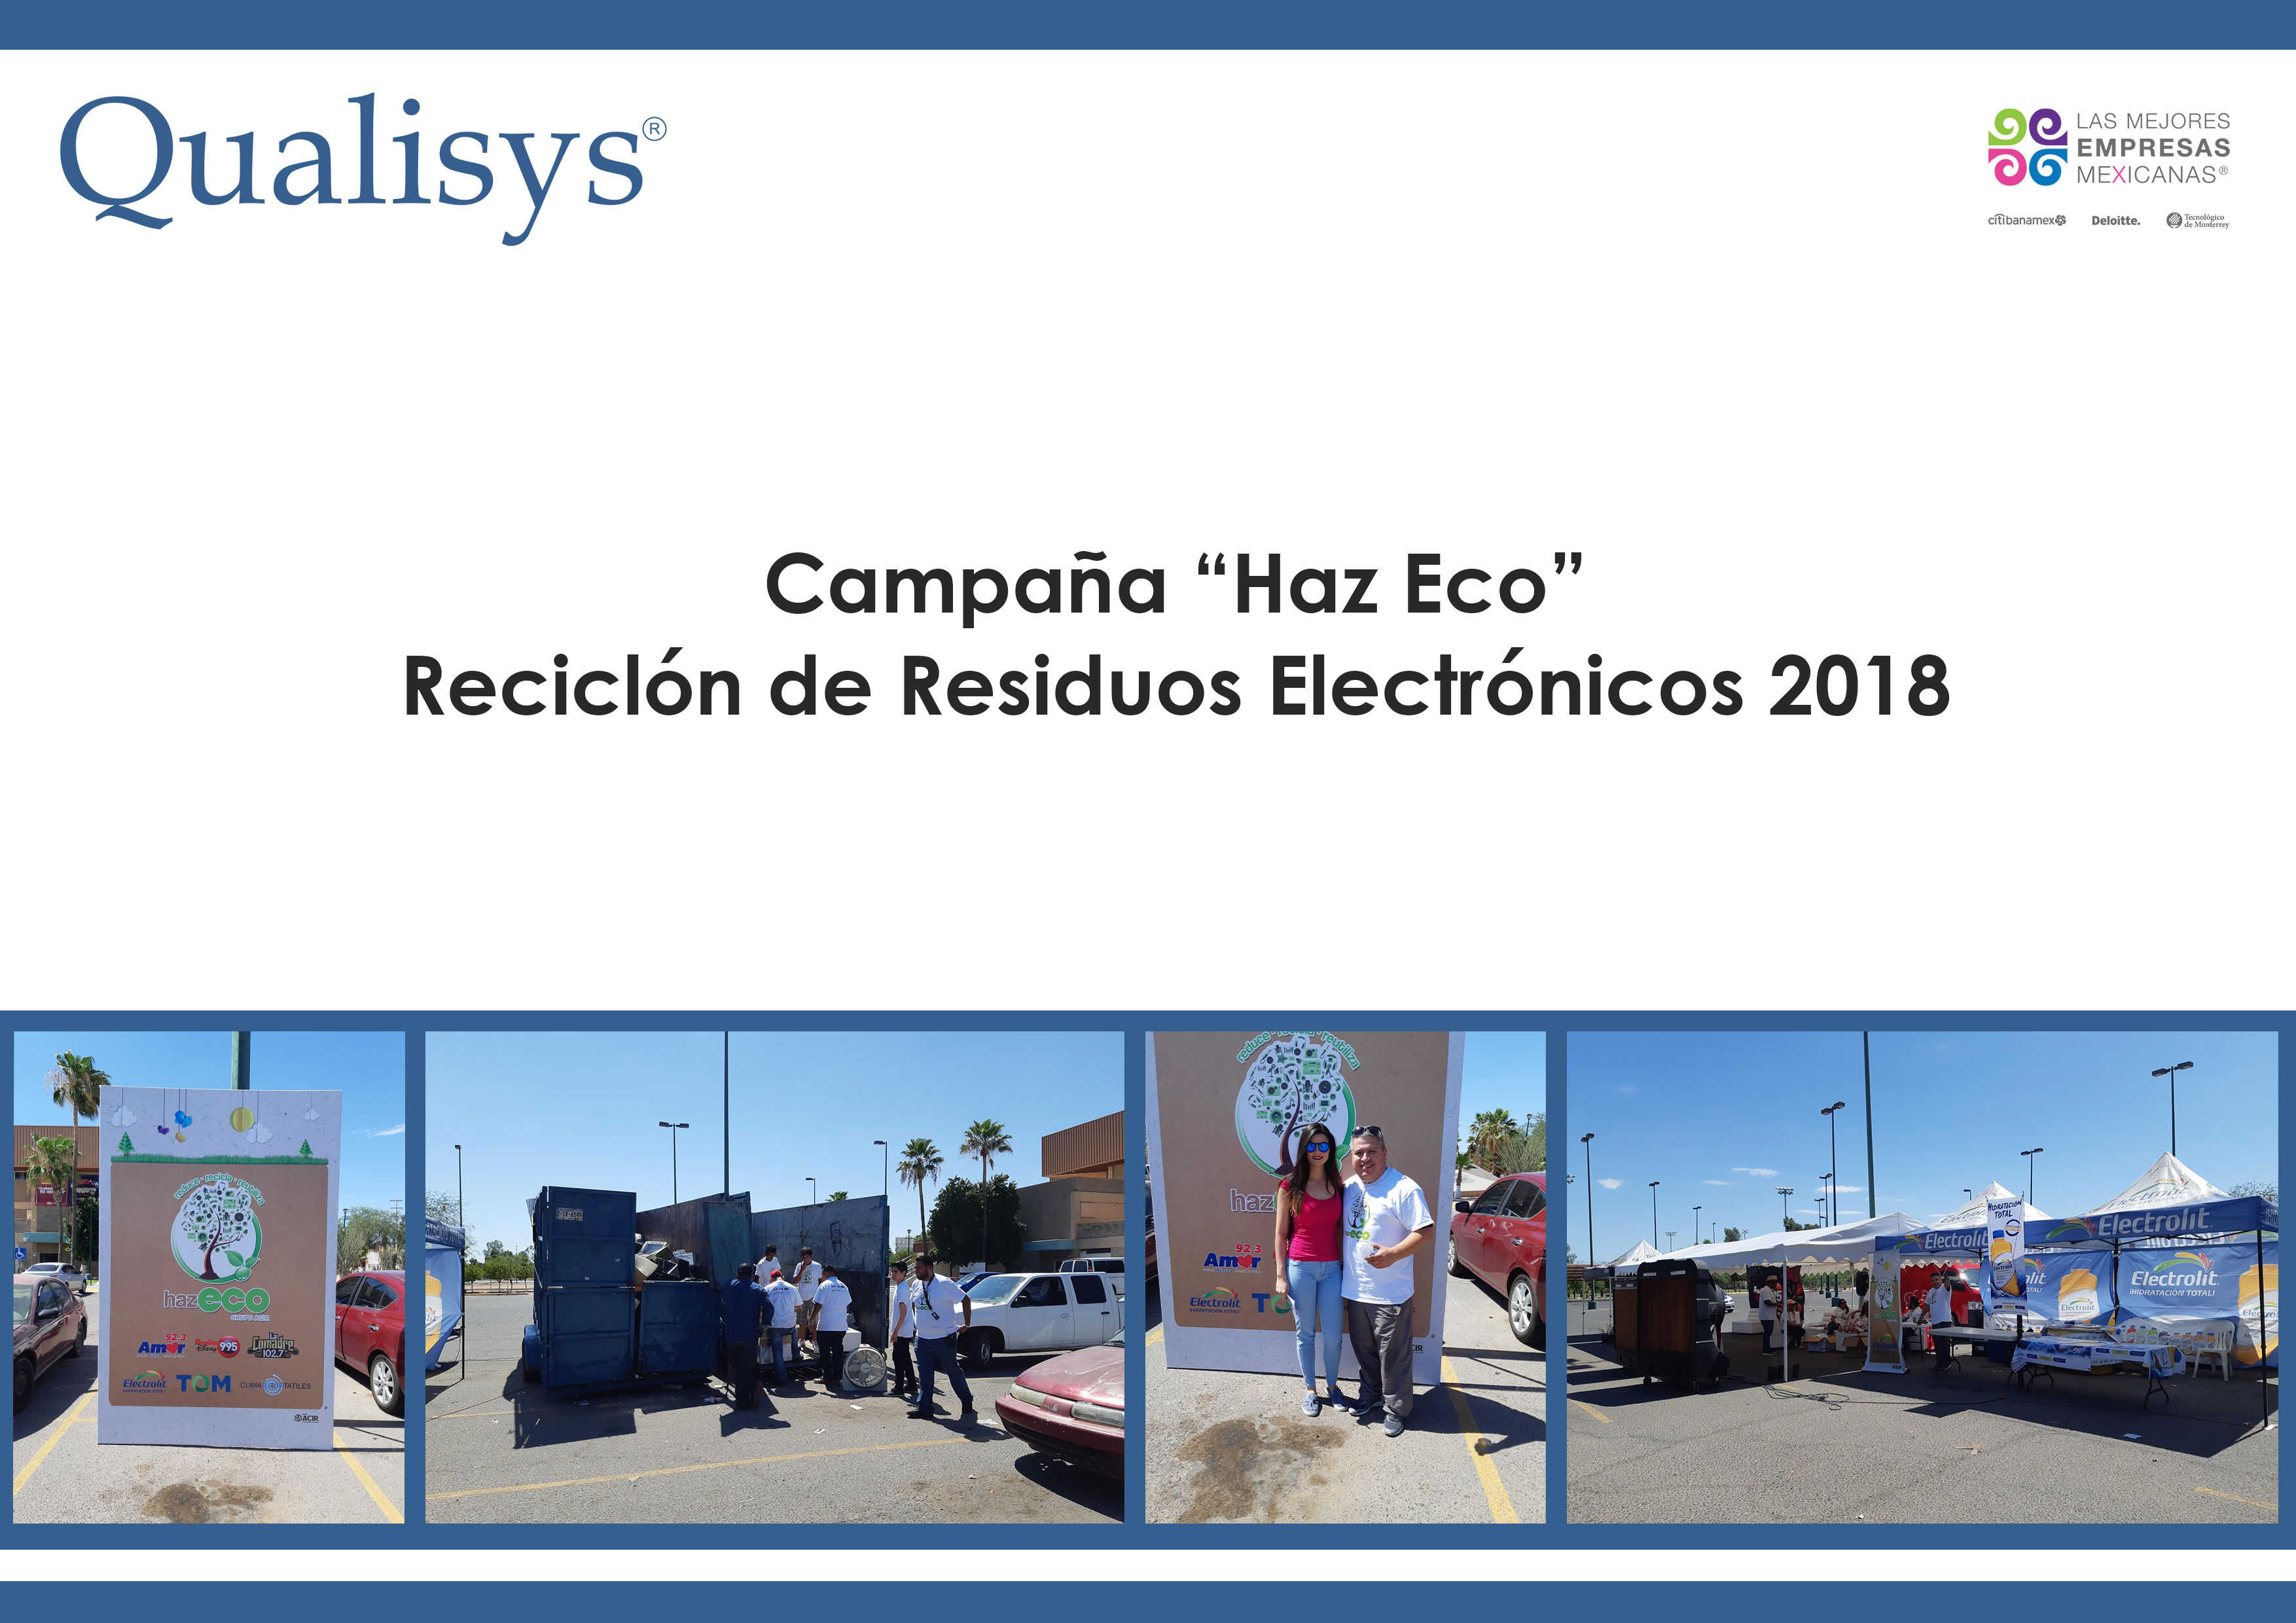  Campaña Haz Eco | Reciclón de Residuos Electrónicos 2018 - Image